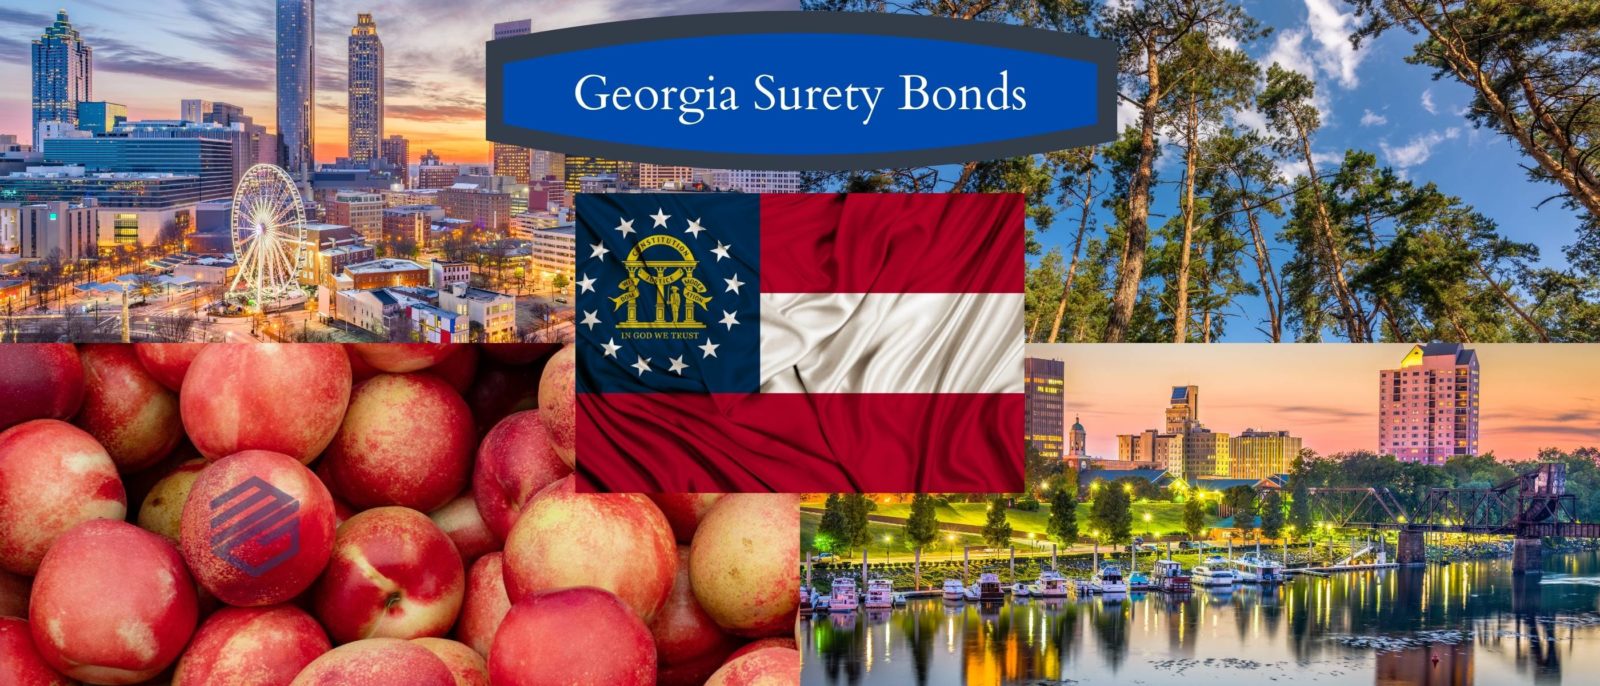 Georgia Surety Bonds - 5 images representing the state of Georgia including a the state flag, Atlanta, Augusta, peaches and Georgia pine trees. A text box reads, "Georgia Surety Bonds".